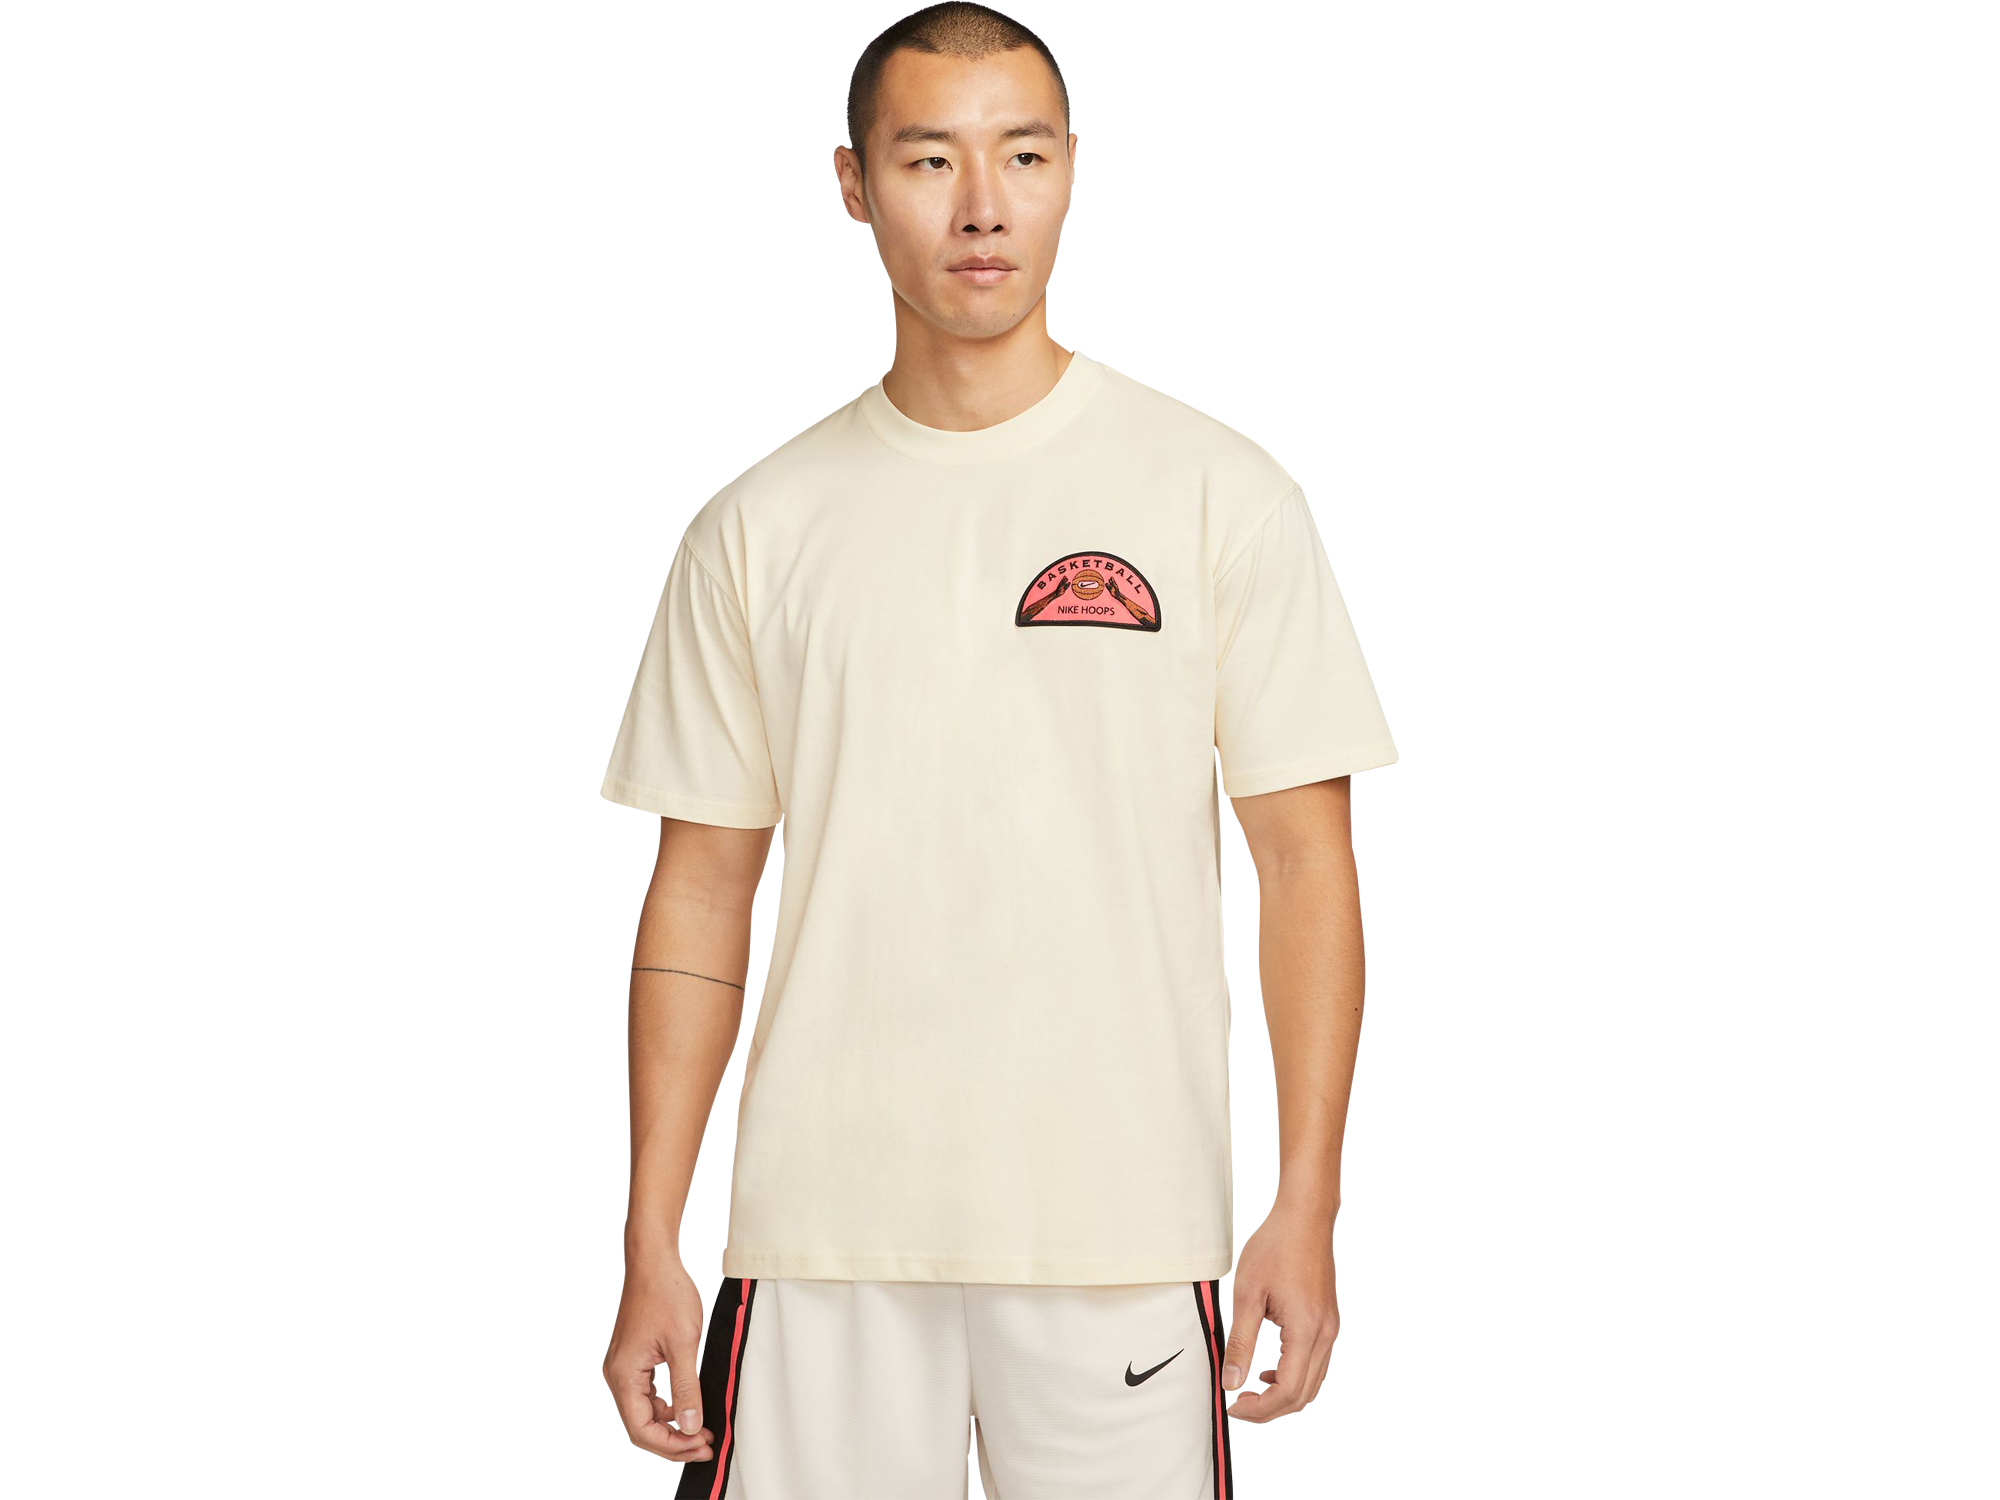 Nike Max 90 Basketball T-Shirt